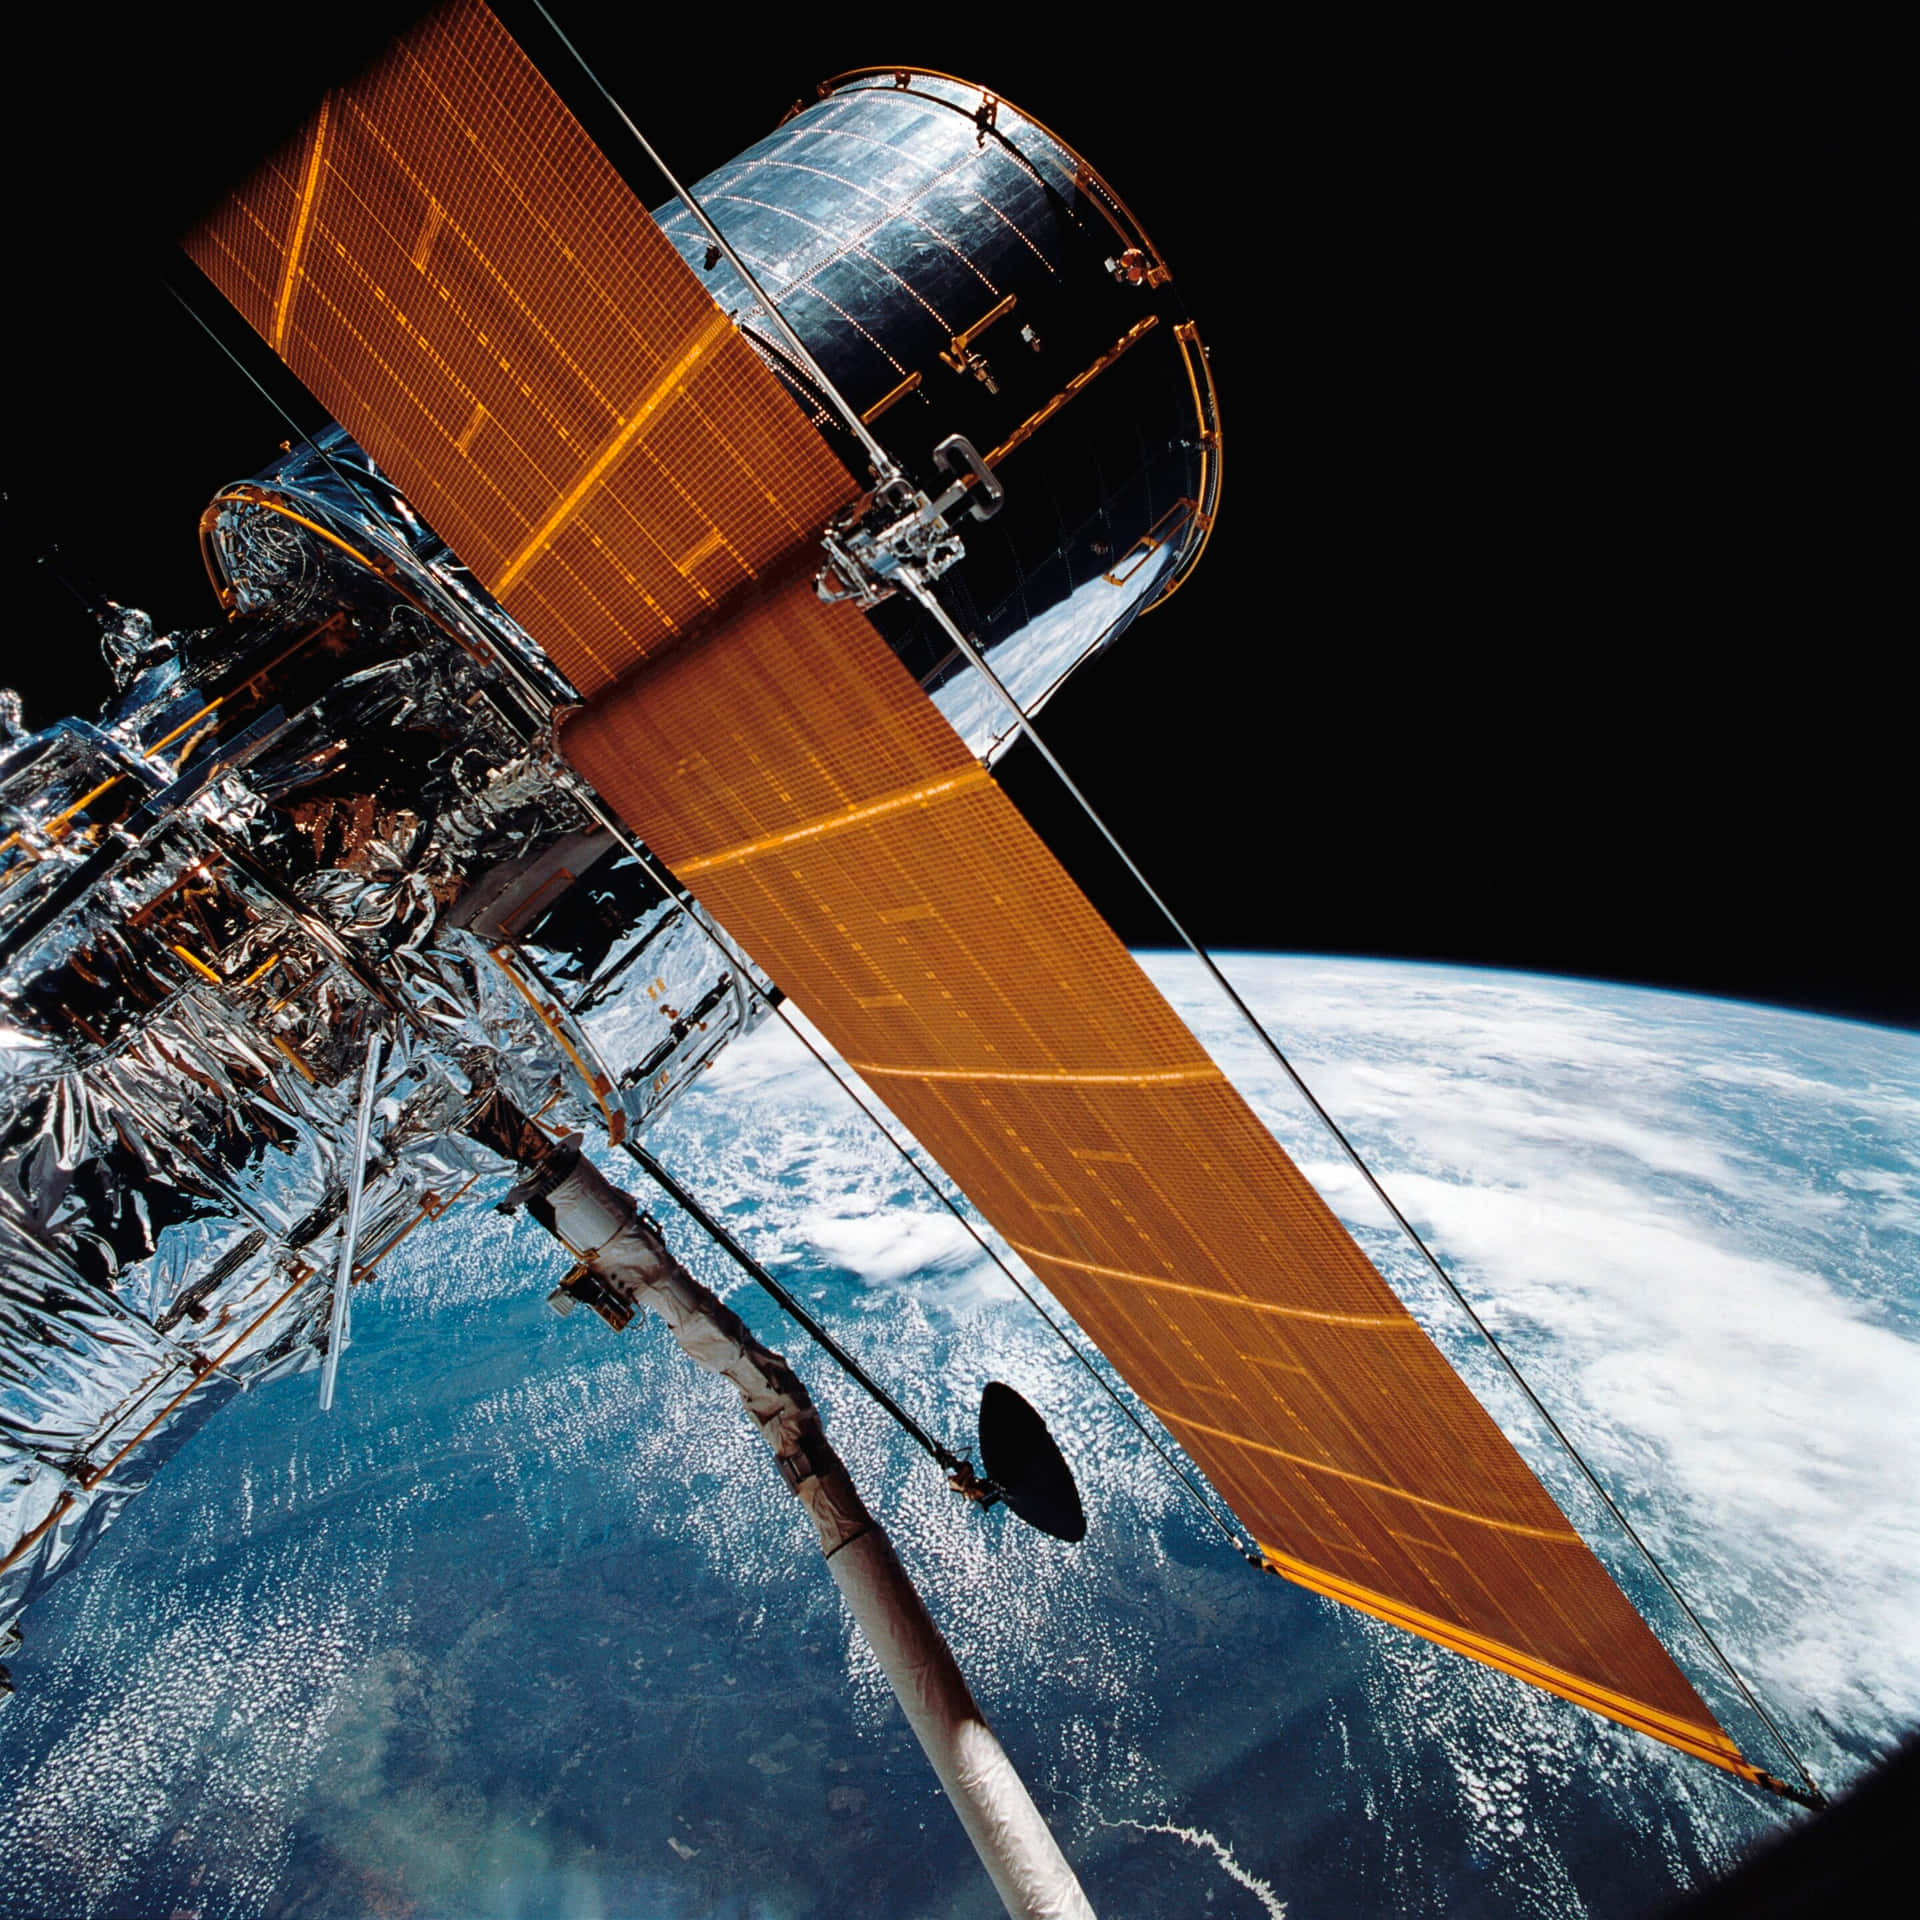 Reaching Orbit Hubble Pictures